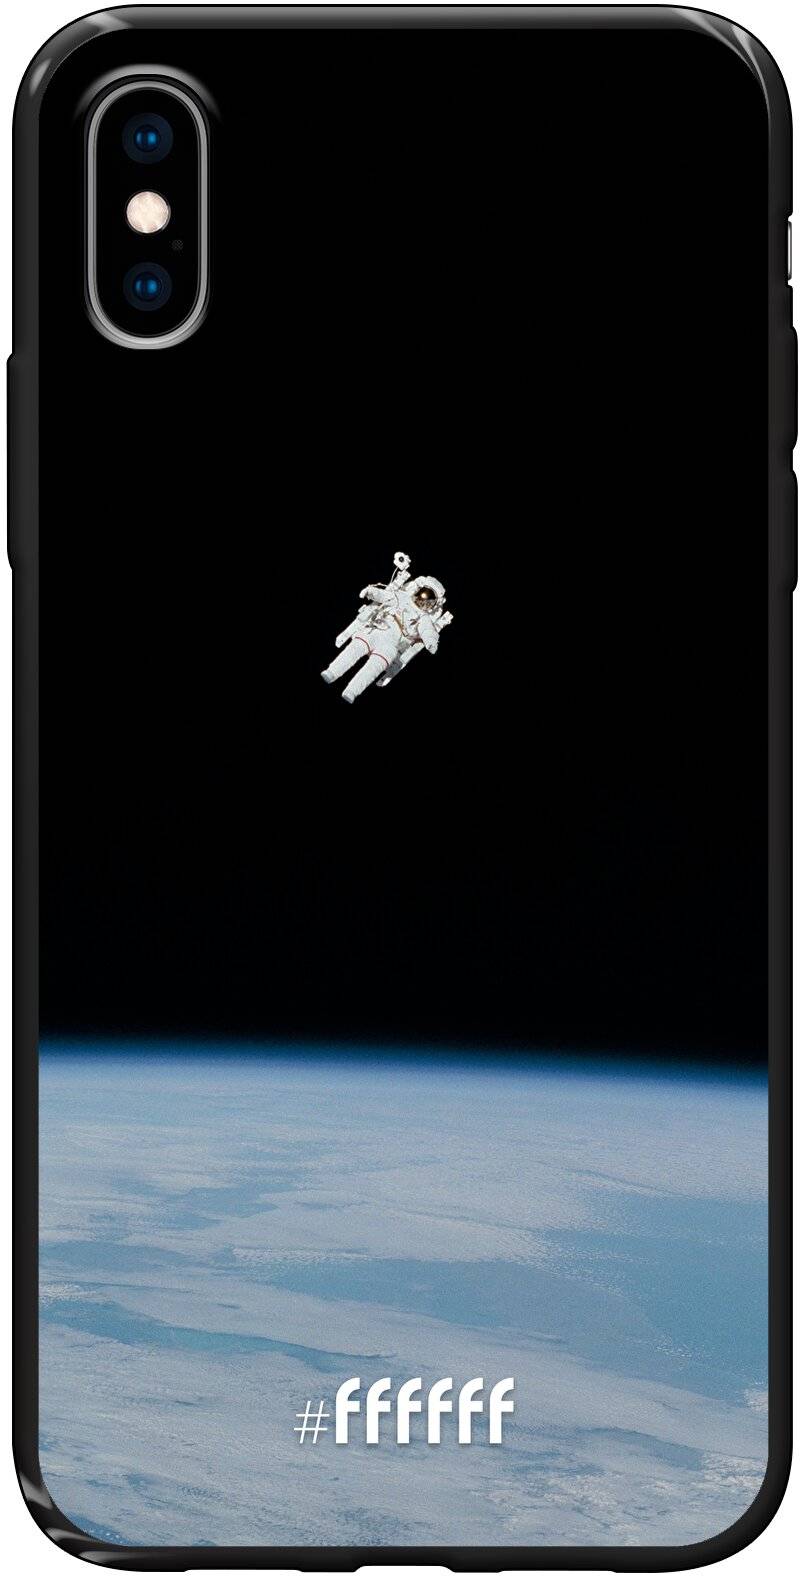 Spacewalk iPhone Xs